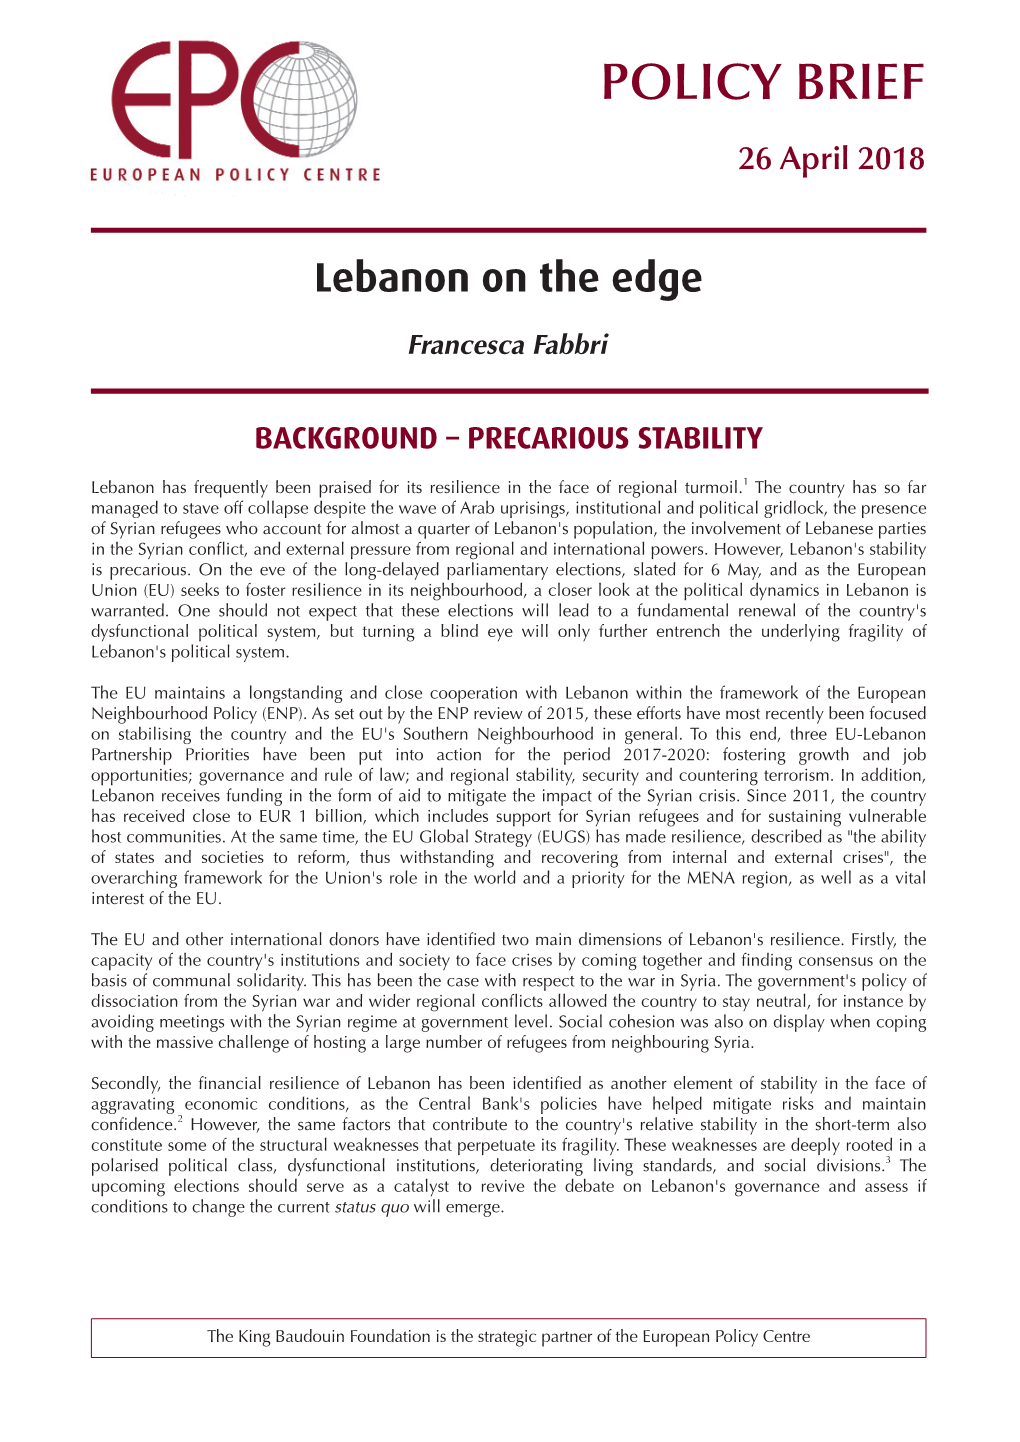 Lebanon on the Edge